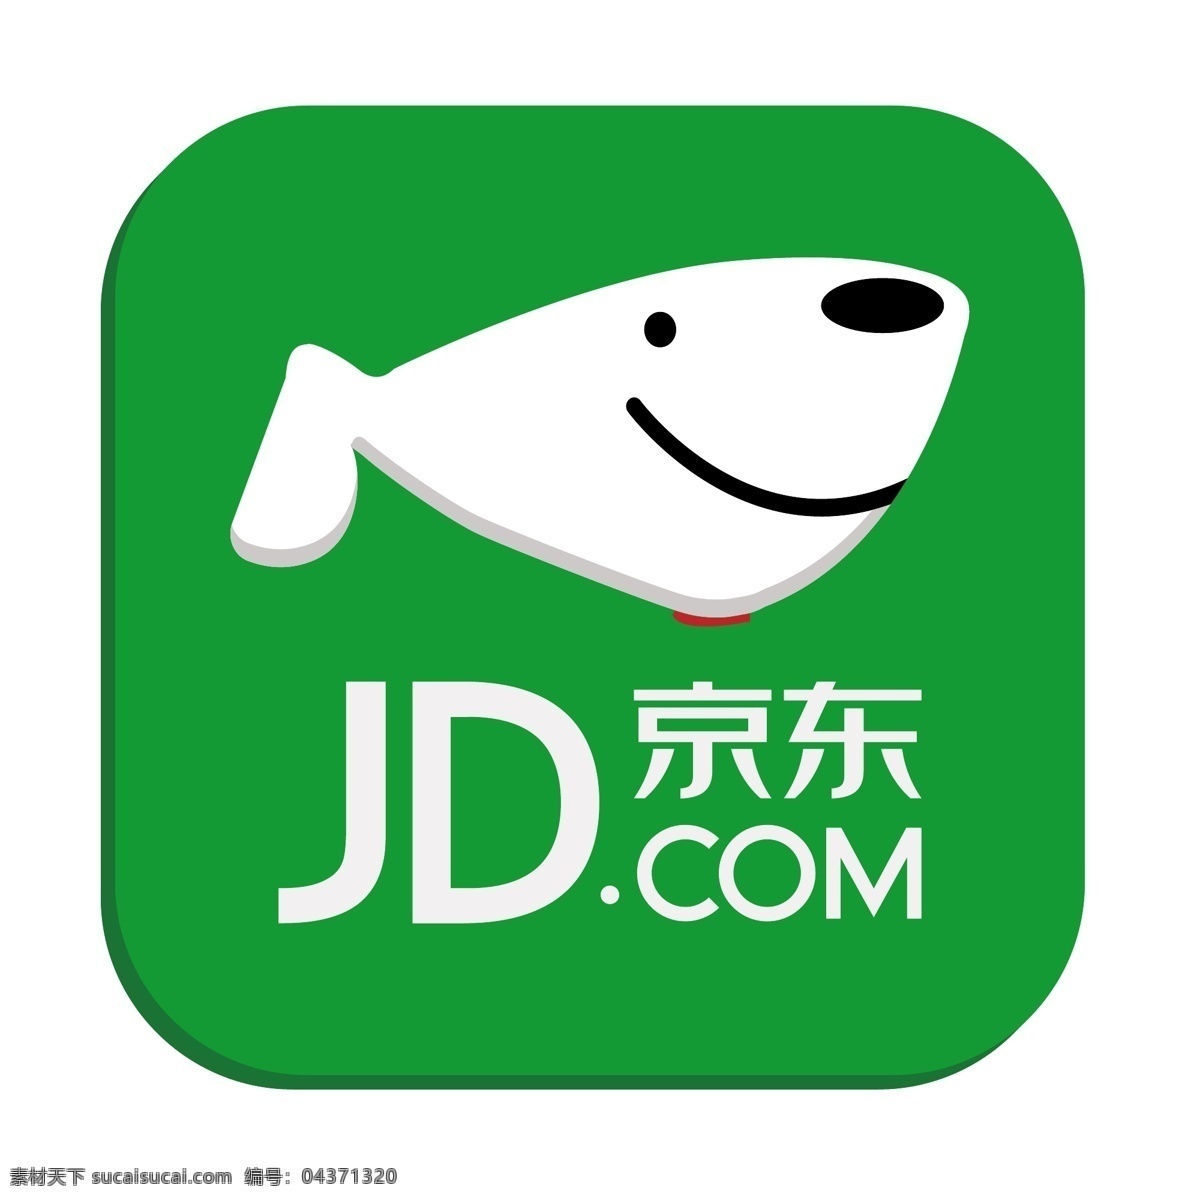 jd com 京东 绿色 logo 图标 logo图标 应用app 手机app 免抠图png 千库原创